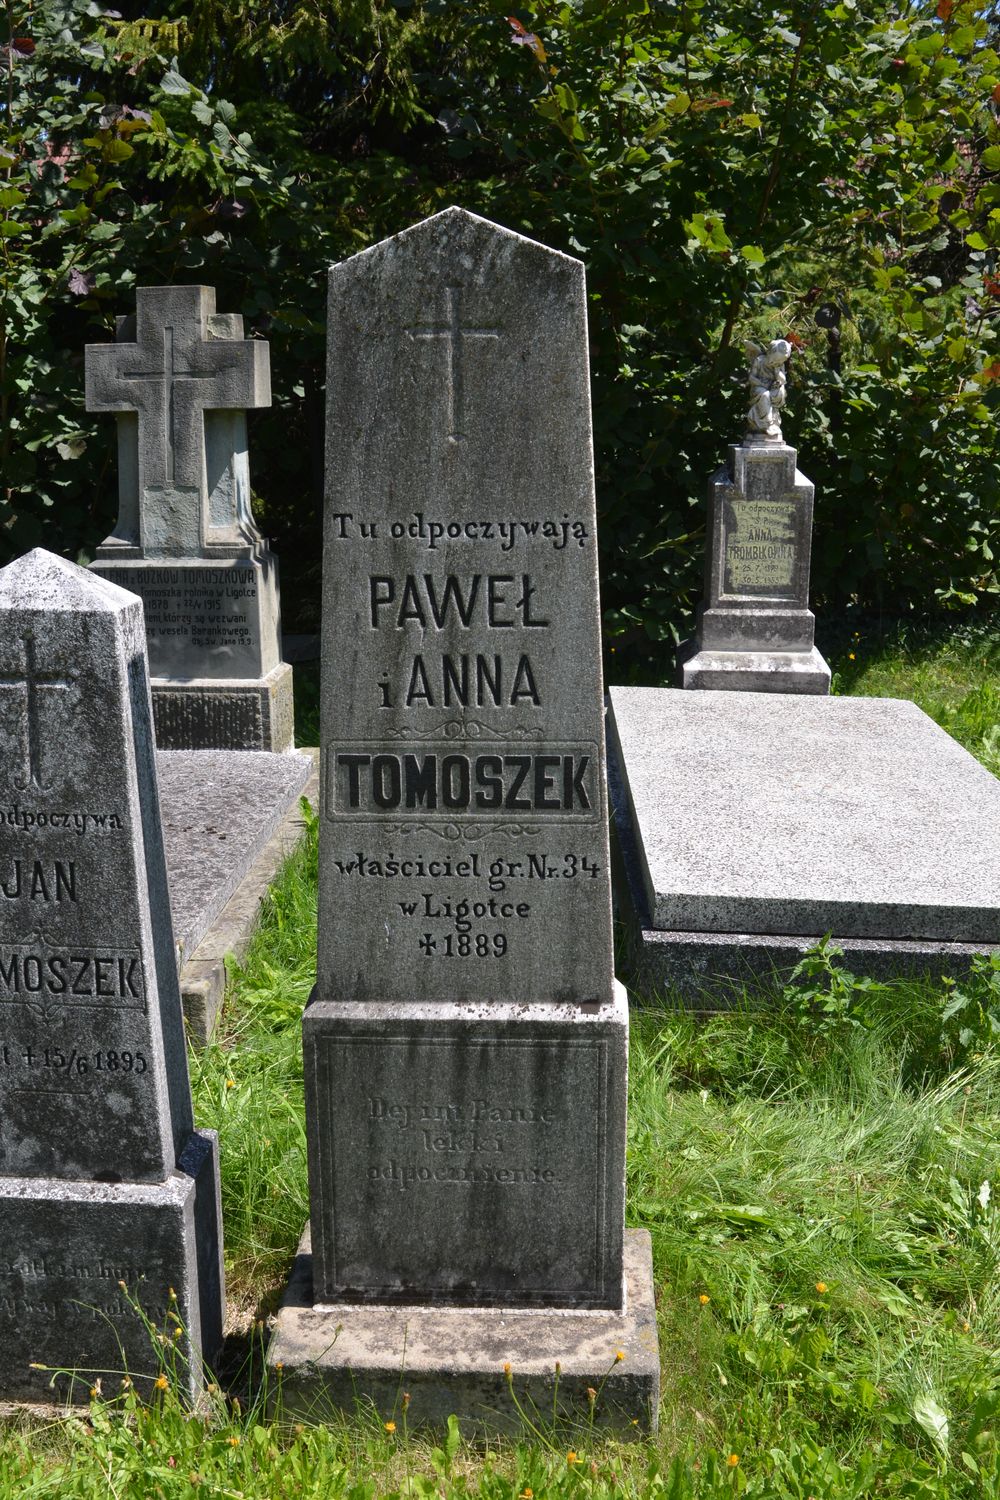 Tombstone of Anna and Paweł Tomoszek, Evangelical cemetery in Ligotka Kameralna